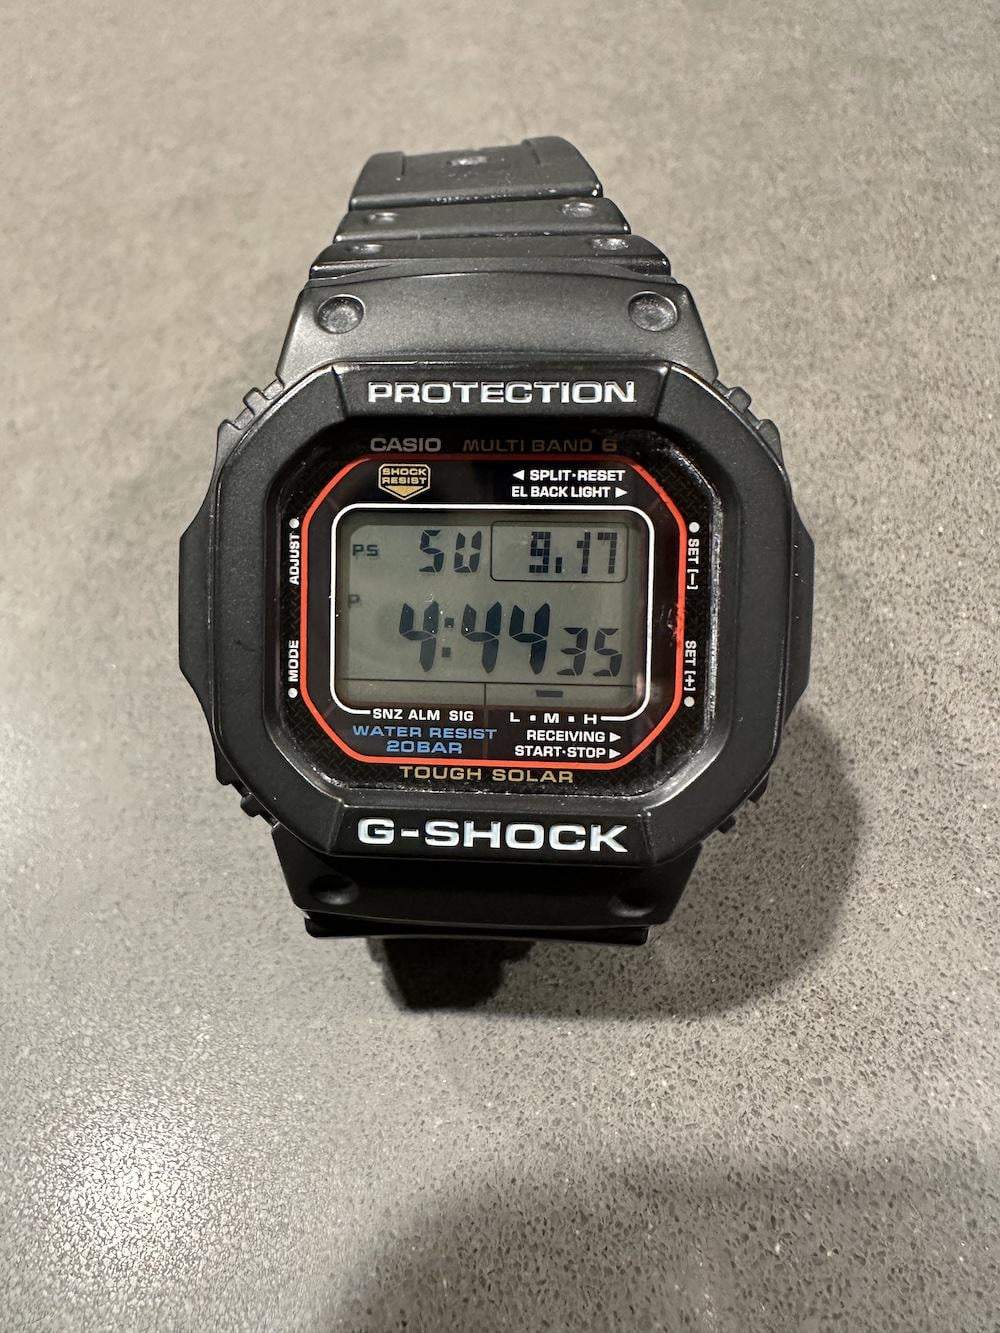 WTS] Casio G-Shock GW-M5610 w/ JP Strap - $75 | WatchCharts